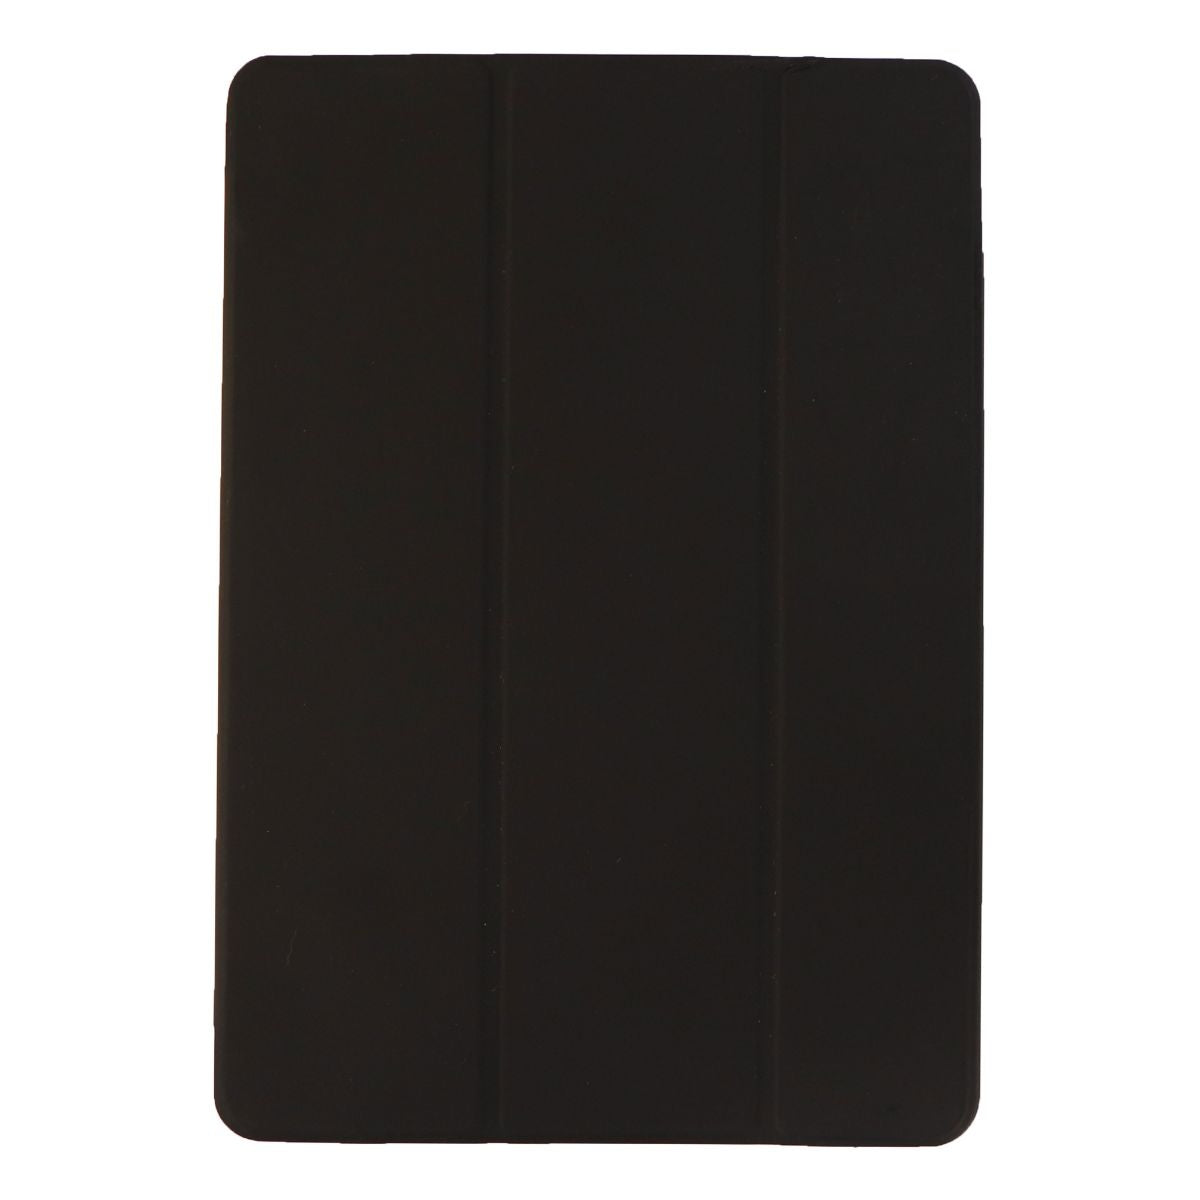 Verizon Slim Hardshell Folio Cover Case for Apple iPad Pro (10.5) 2017 - Black iPad/Tablet Accessories - Cases, Covers, Keyboard Folios Verizon    - Simple Cell Bulk Wholesale Pricing - USA Seller